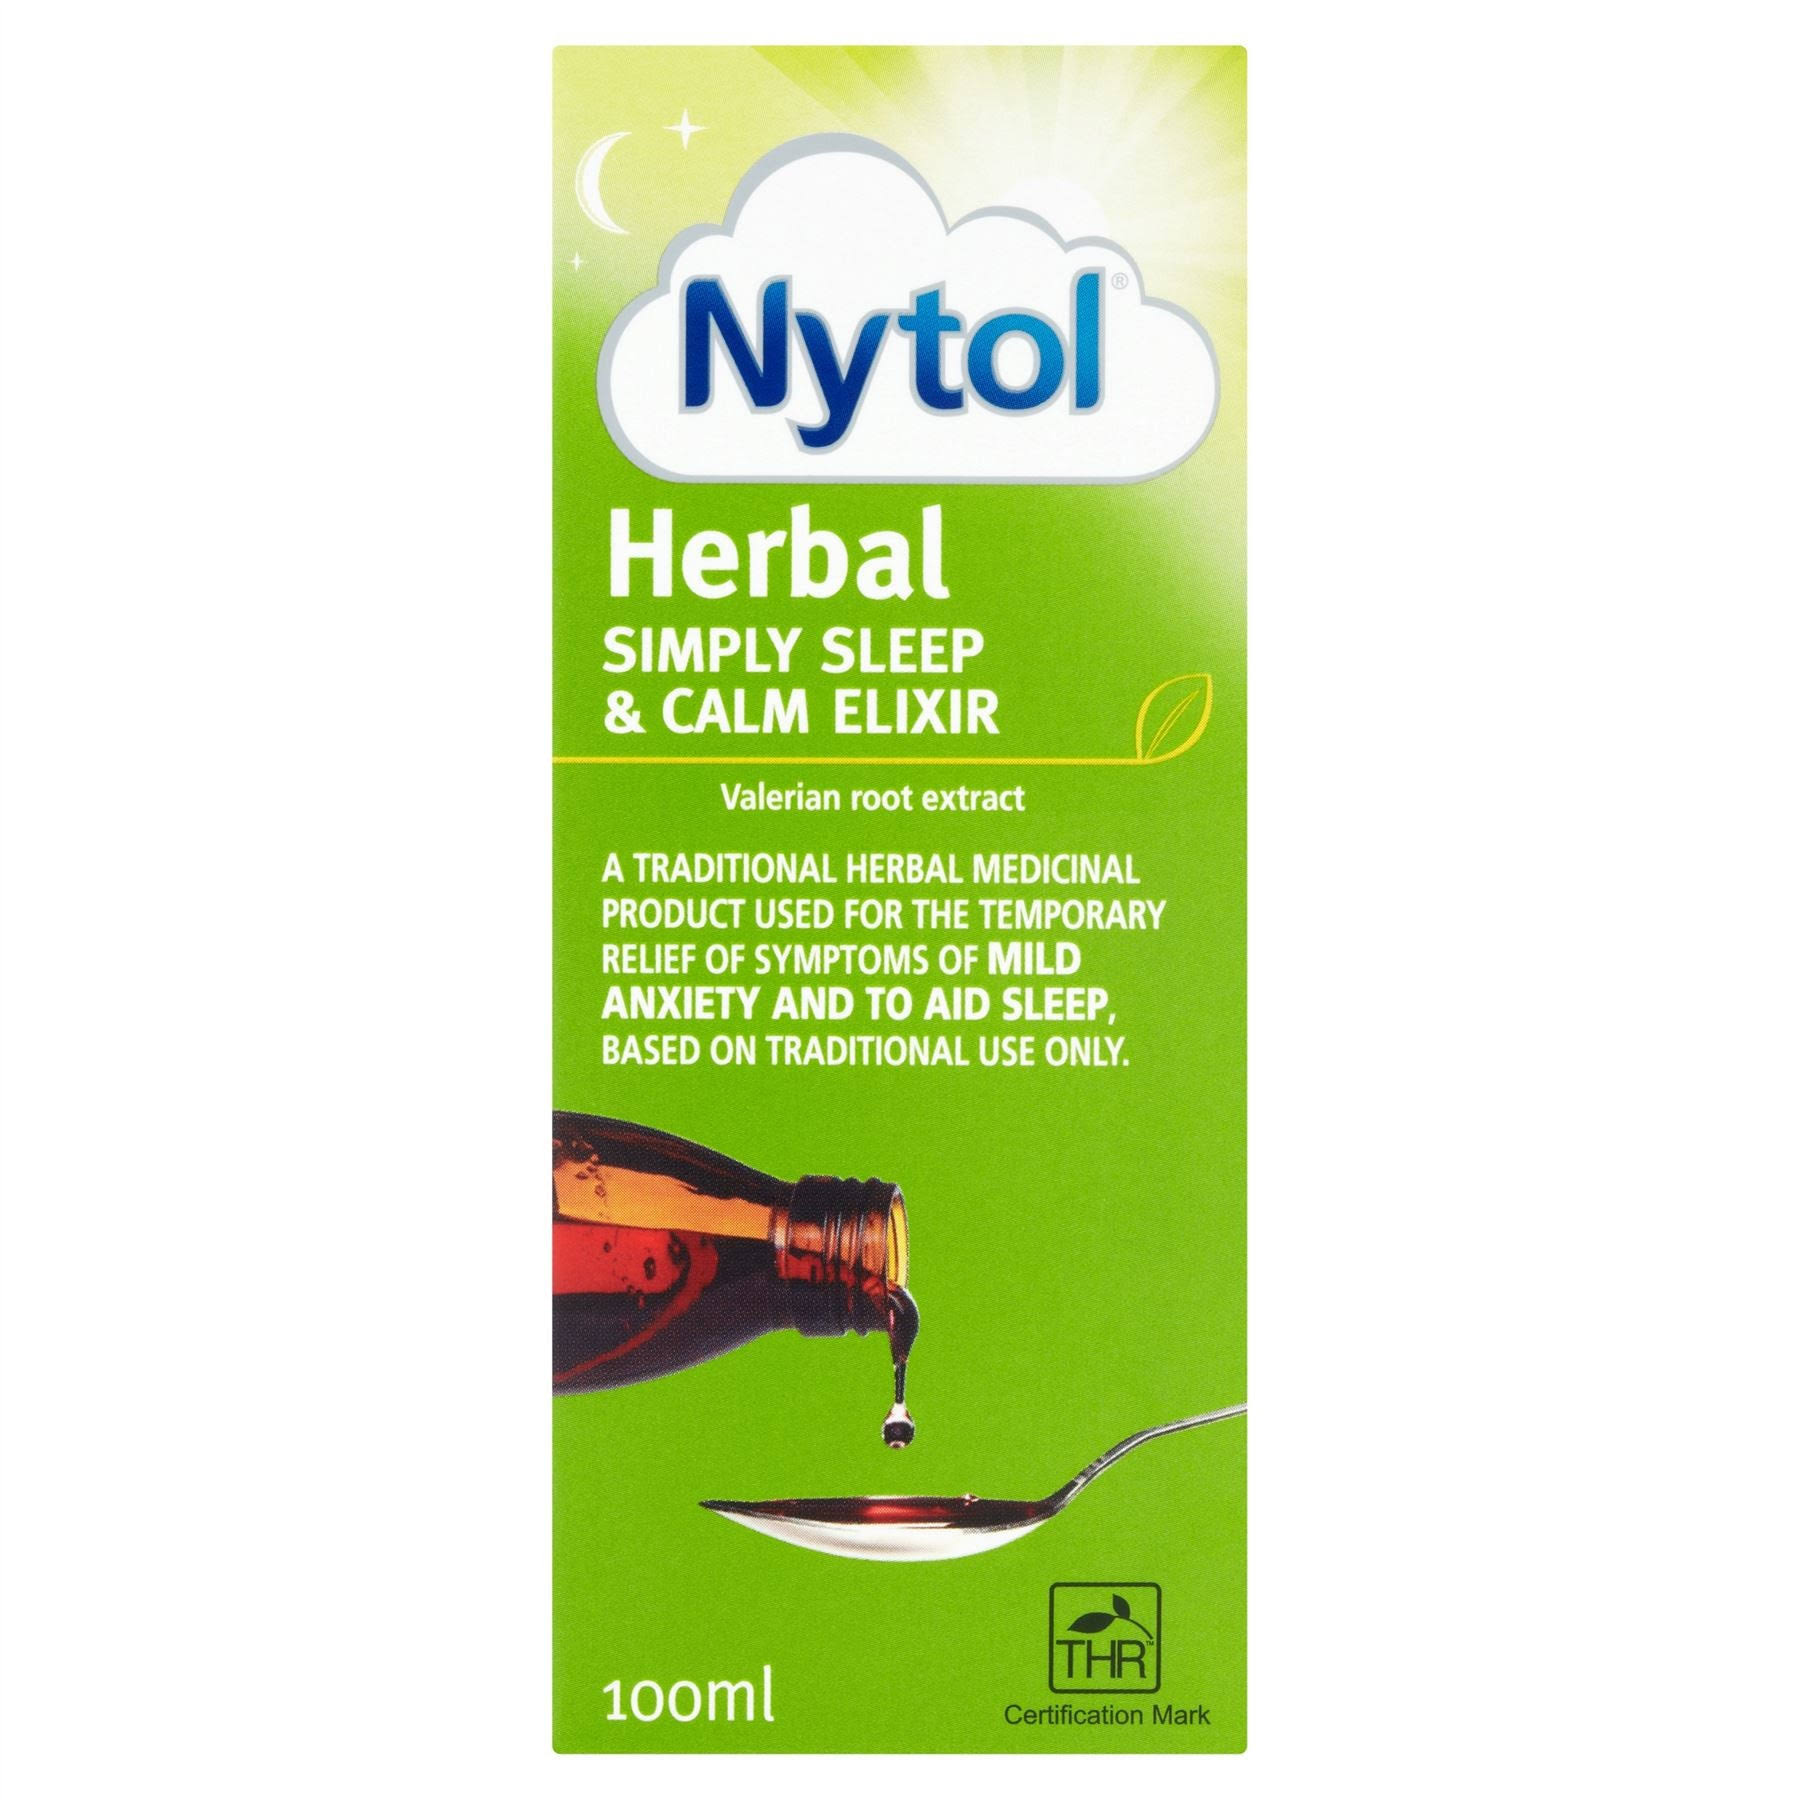 Nytol Herbal Simply Sleep and Calm Elixir - 100ml